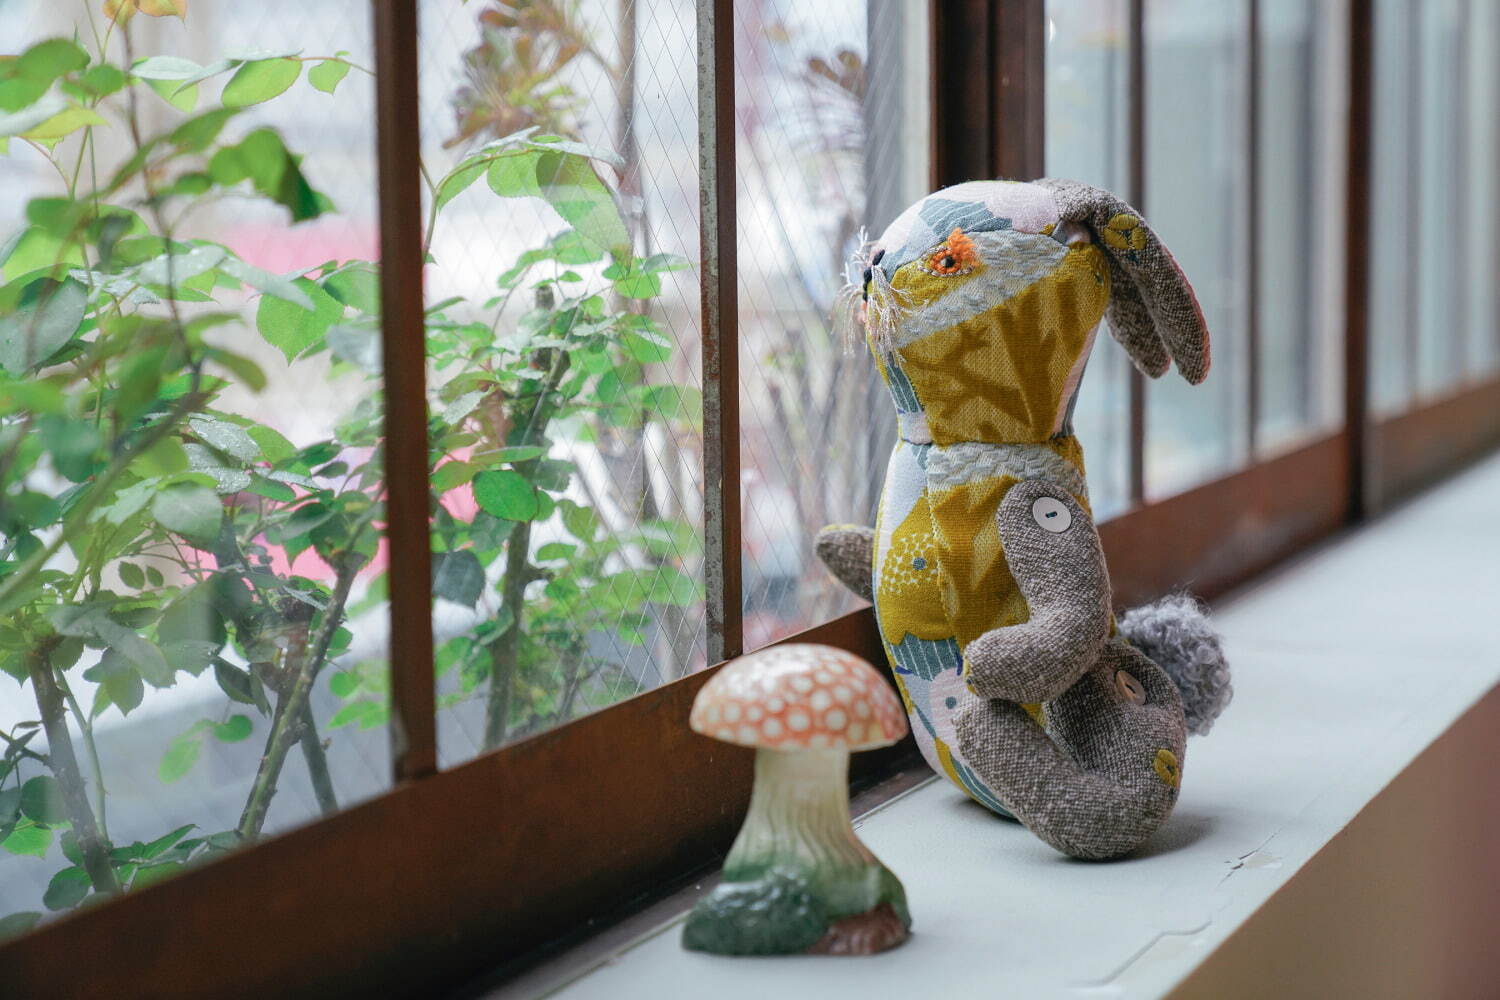 『Animal dolls』POMPON 33,000円(税込)
Photo by Hua Wang